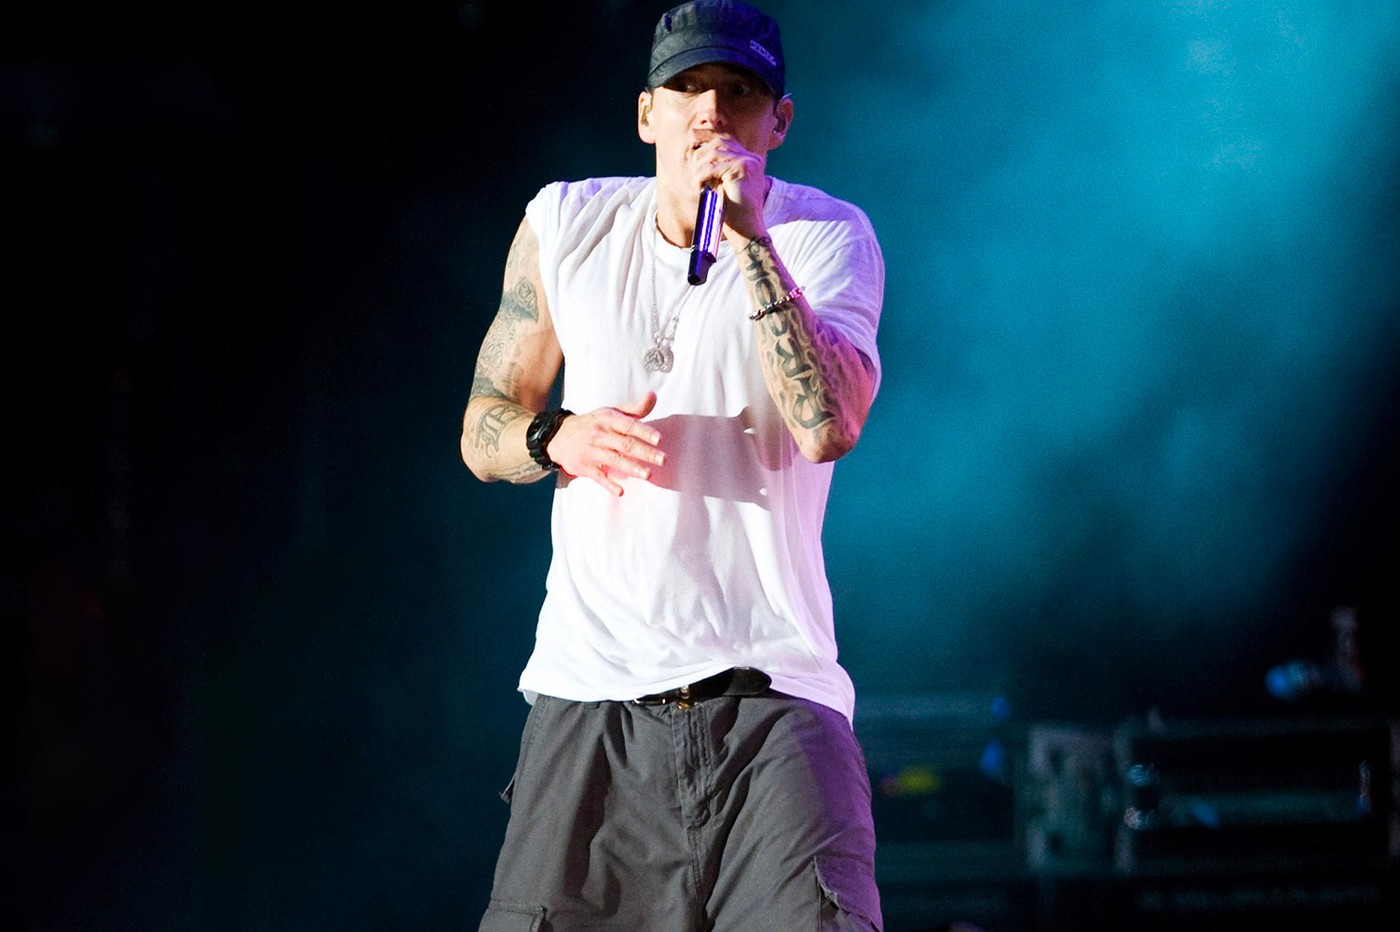 Eminem Sets New World Record With Third "Godzilla" Verse ...
